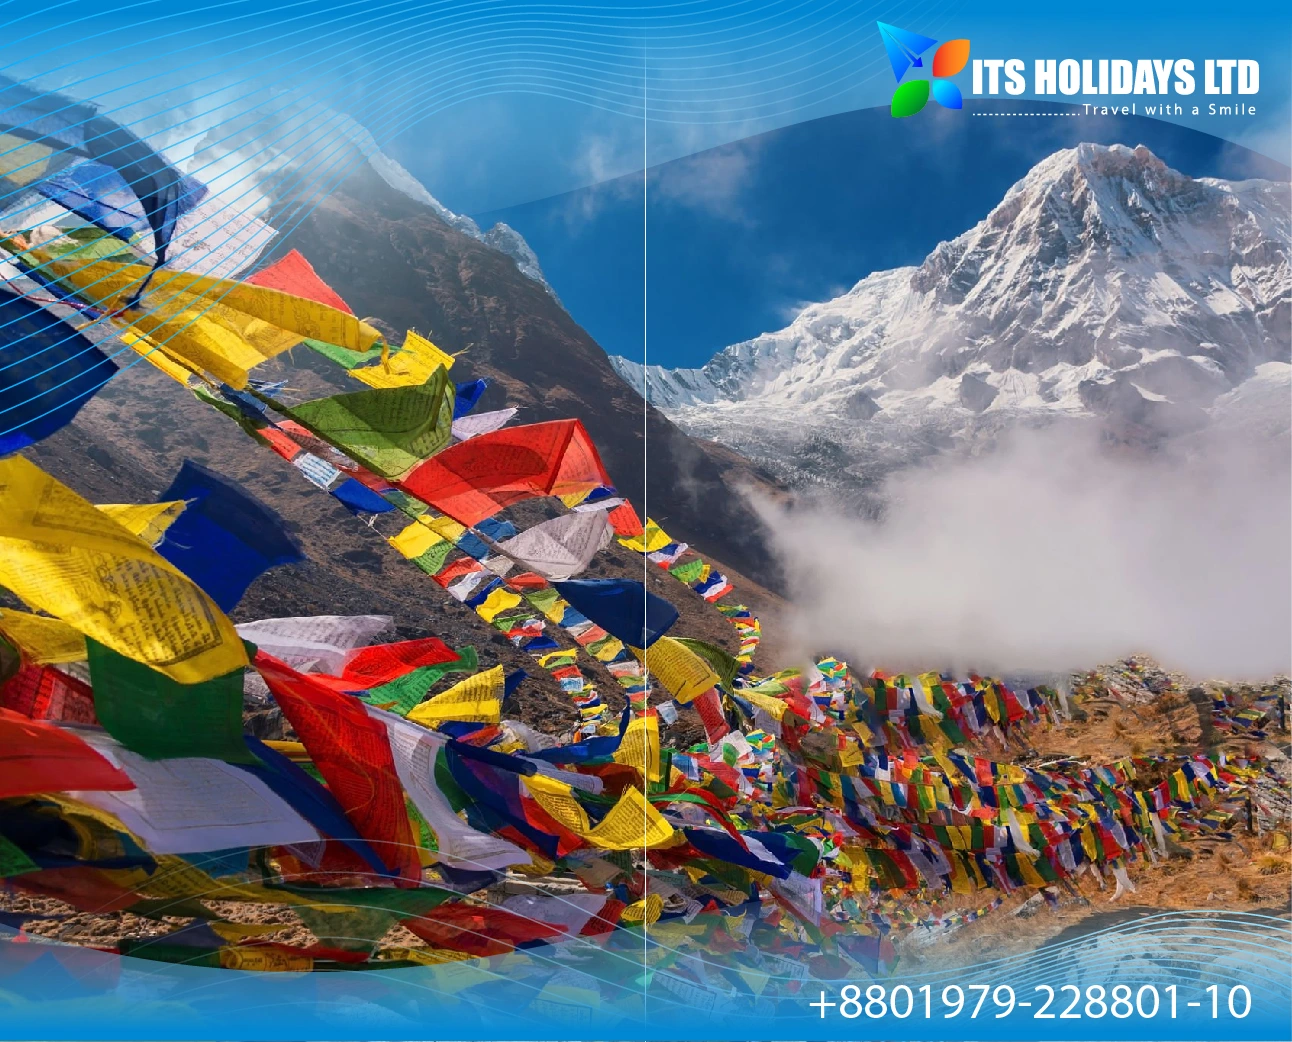 Everest Thrills of Nepal Tour-3